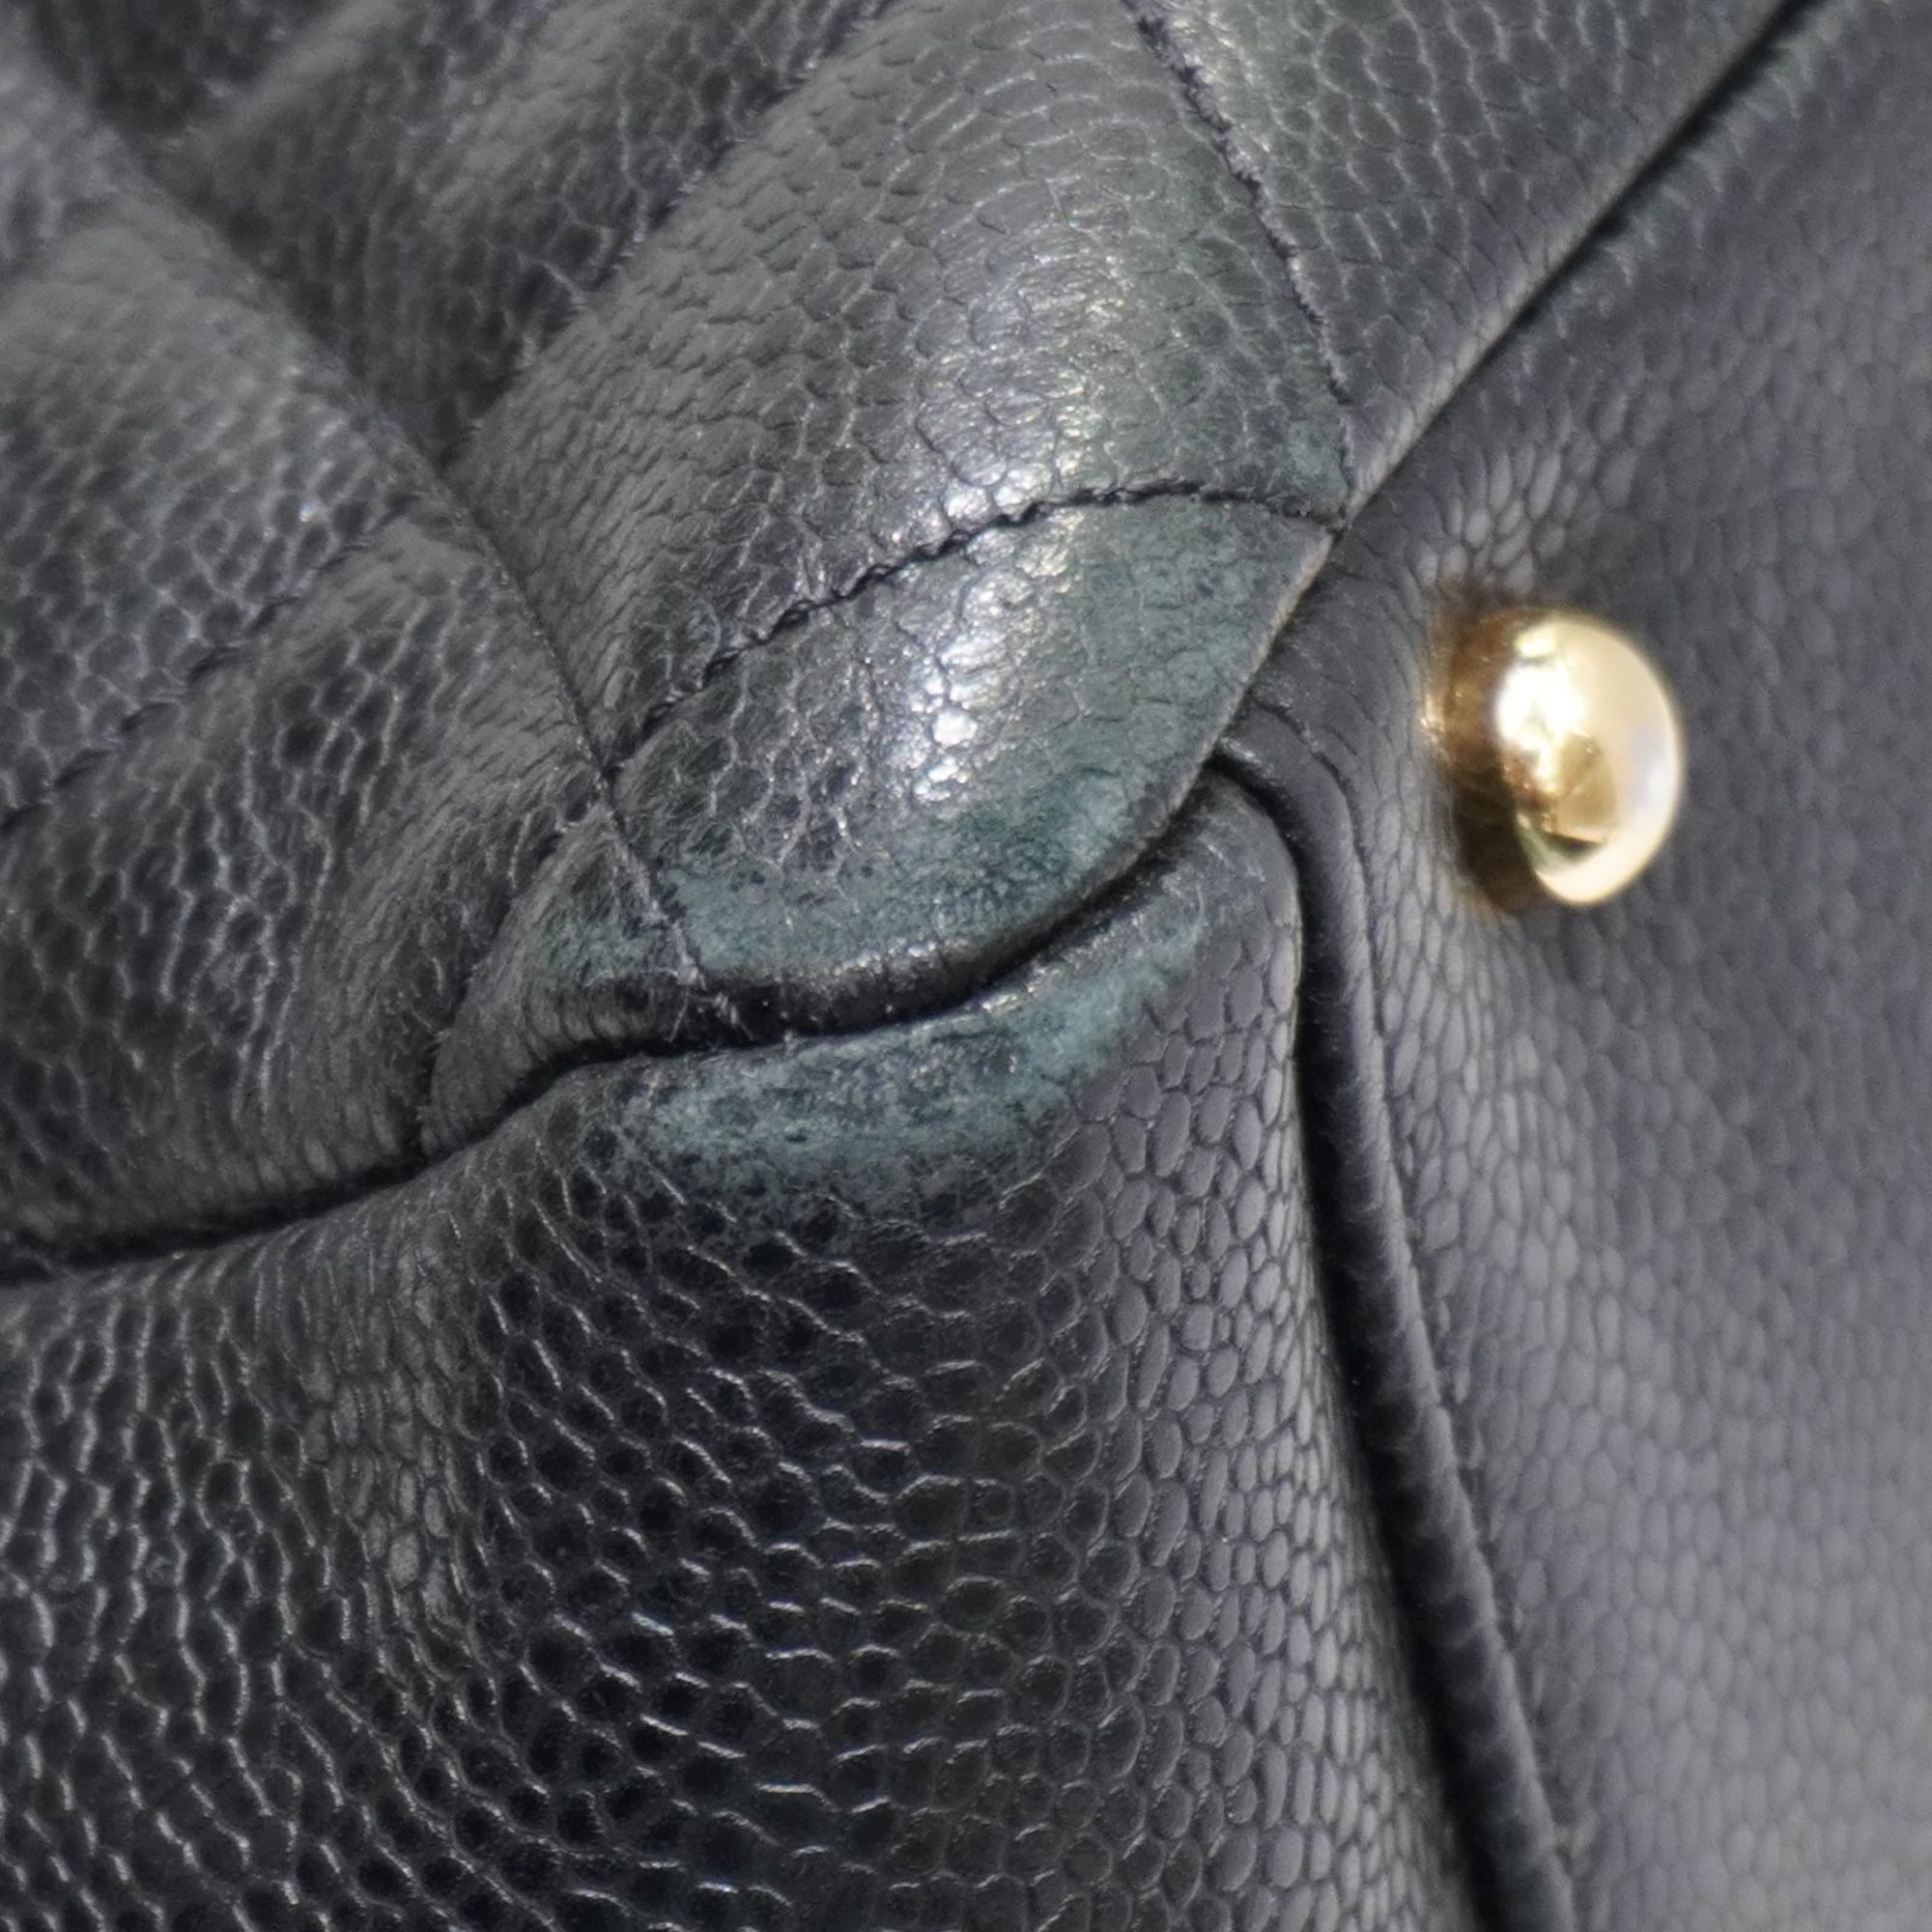 CHANEL Petit Timeless PTT Matelasse Chain Tote A18004 Black (G Hardware) Caviar Skin B74 Women's and Men's Bags